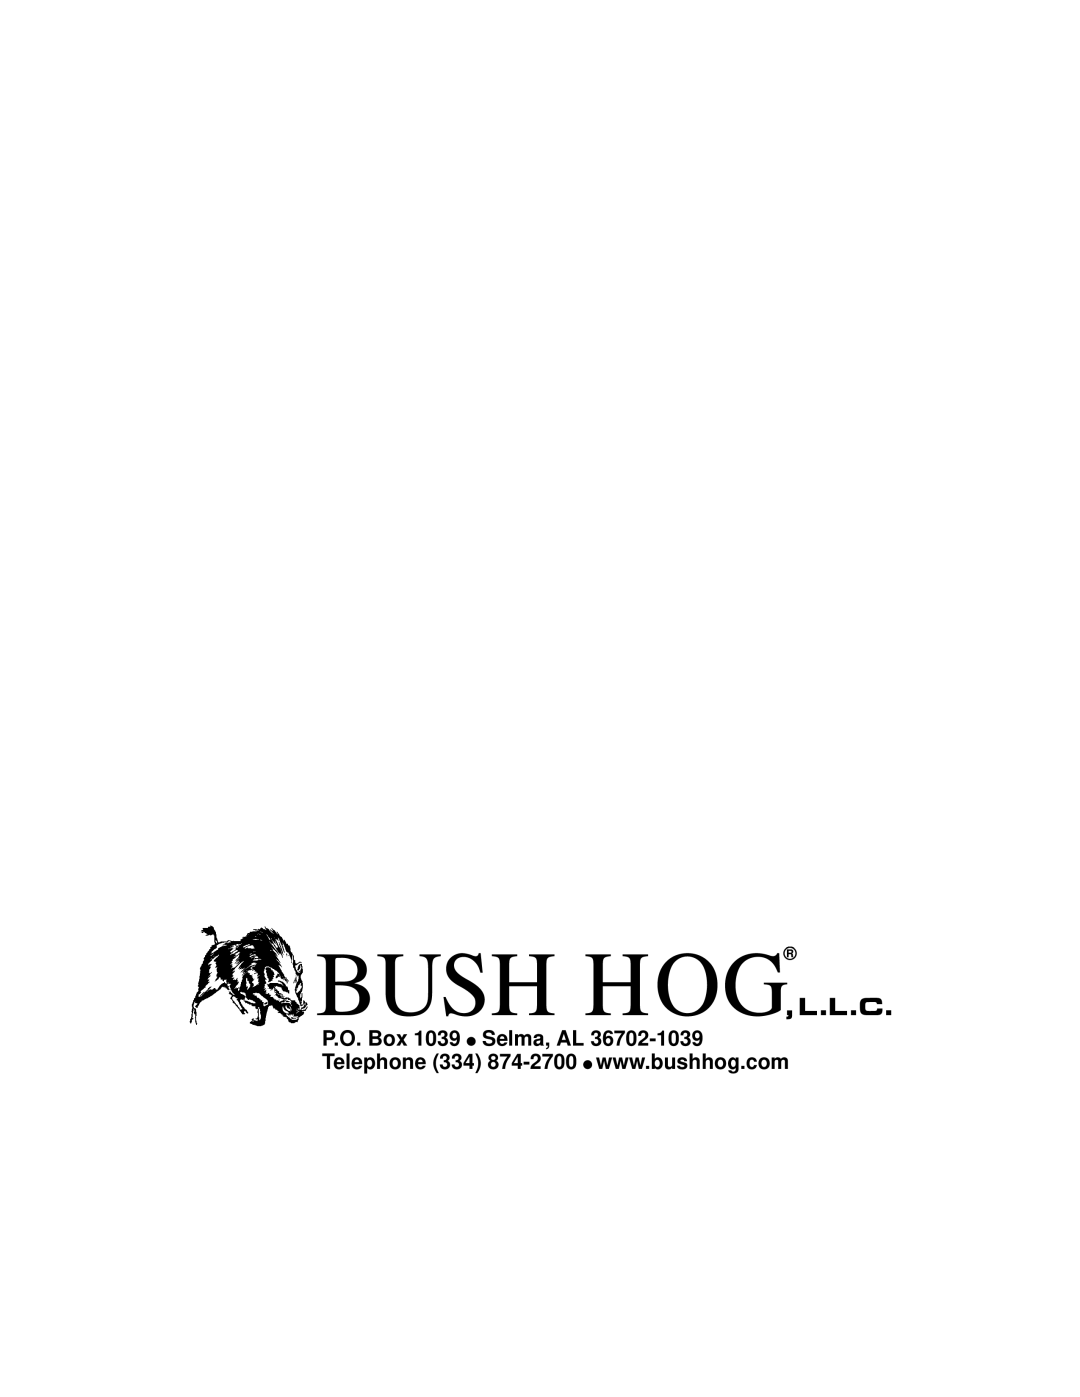 Bush Hog 305, 306 manual P.O. Box, Selma, AL, Bush Hog, L.L.C, Telephone 